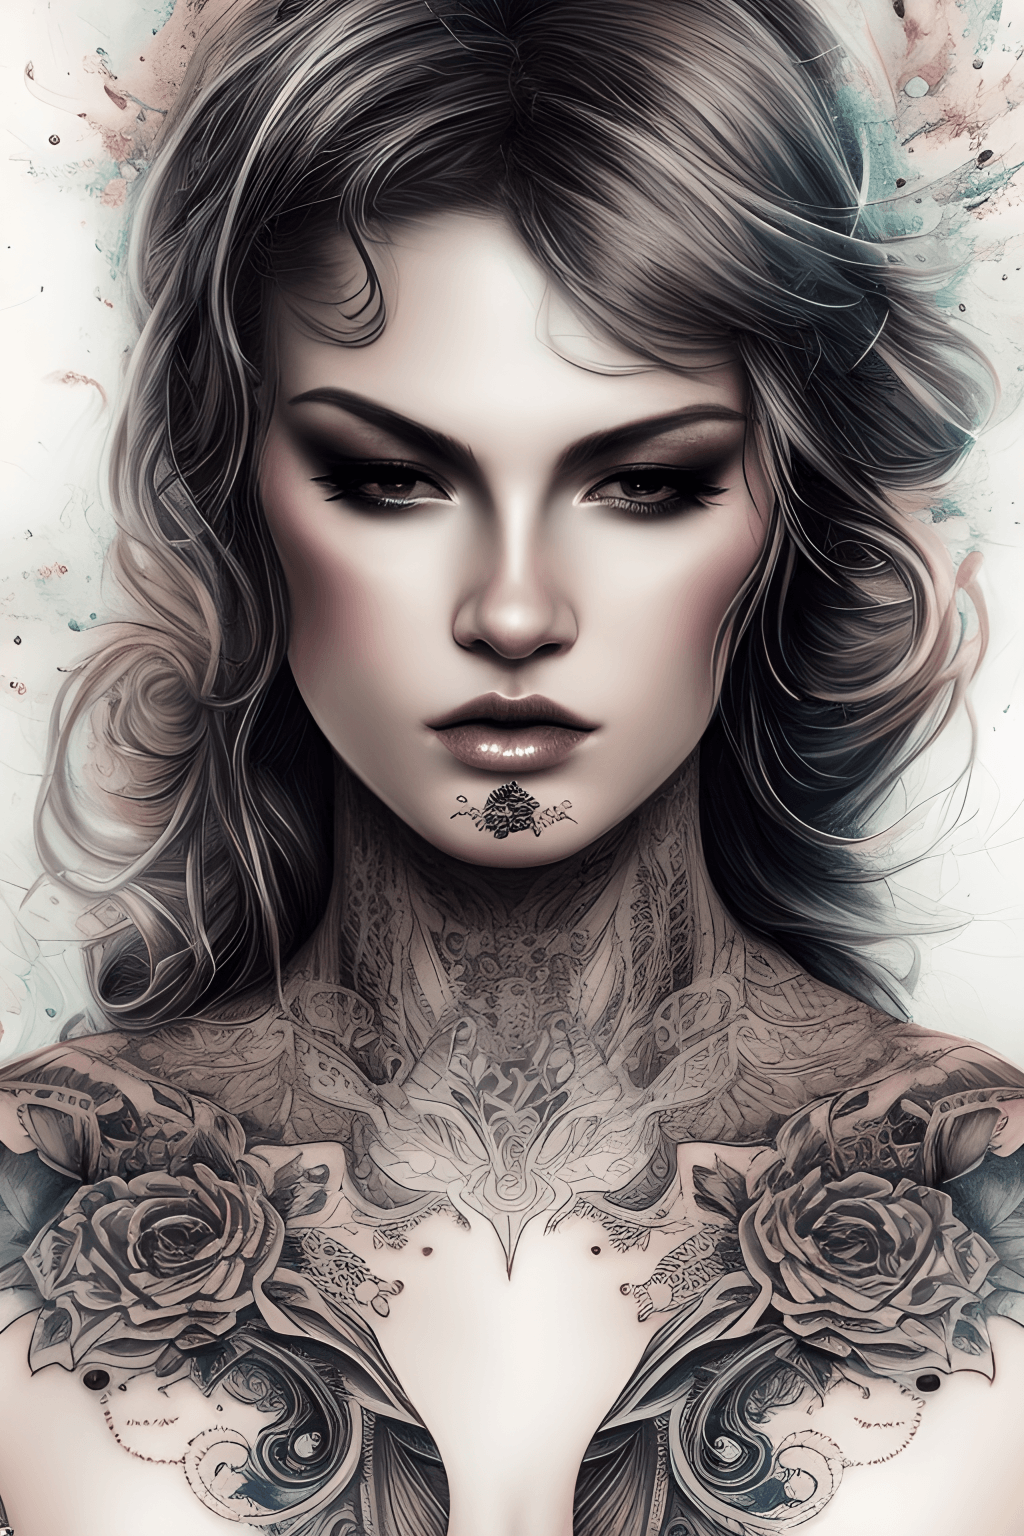 Beautiful Sexy Tattooed Woman Tattoos Fantasy Glossy Intricate Details Sharp Focus Hyper